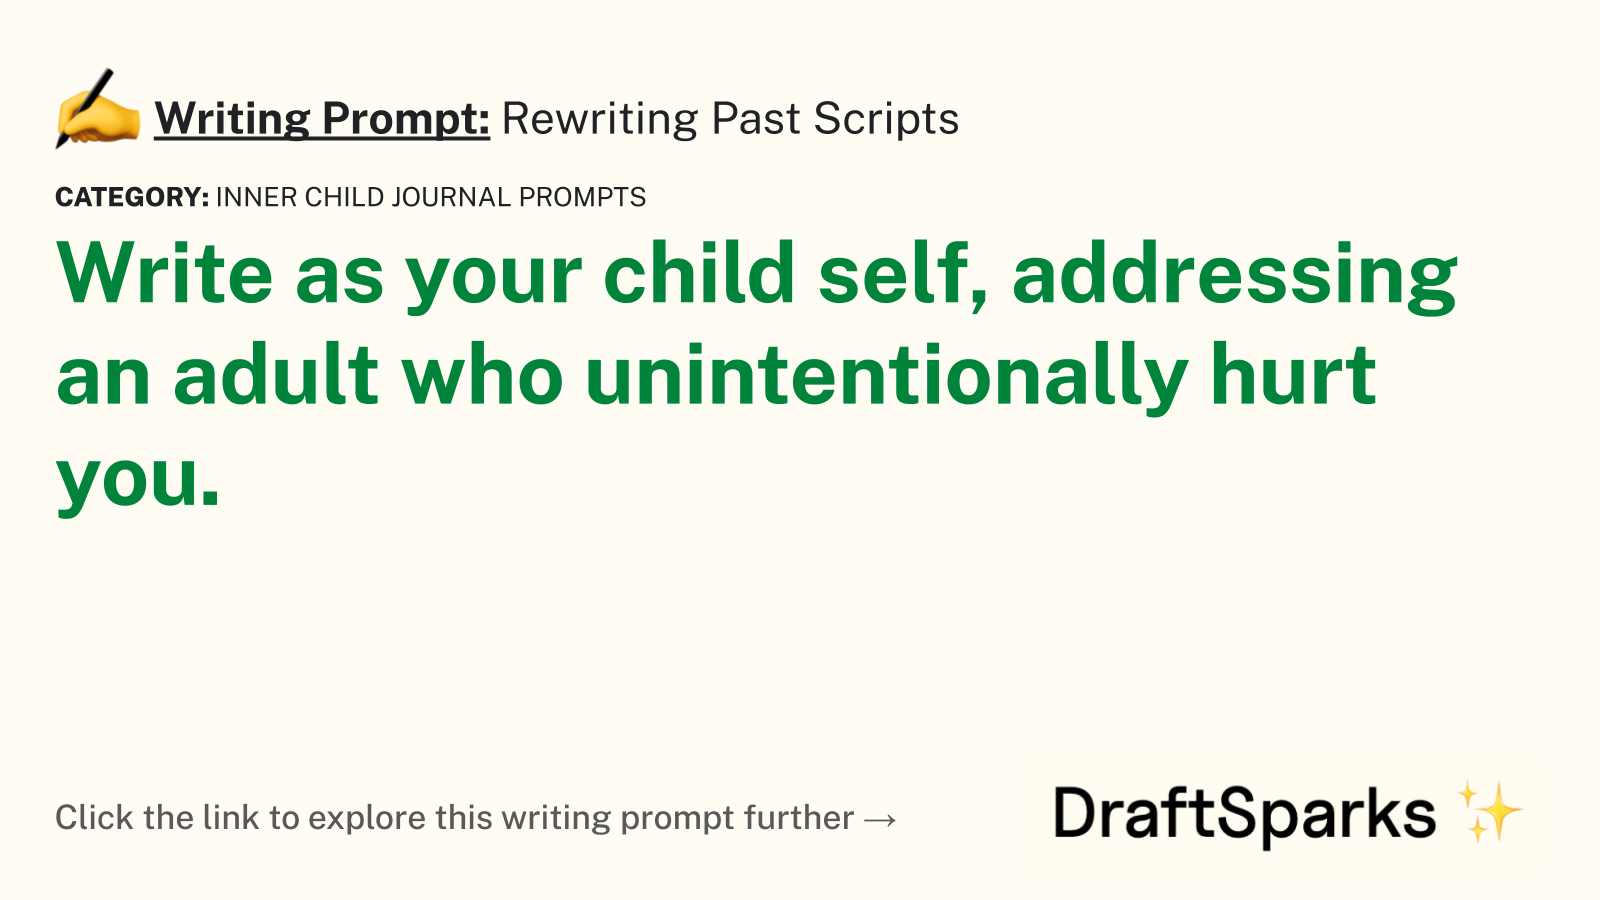 Rewriting Past Scripts